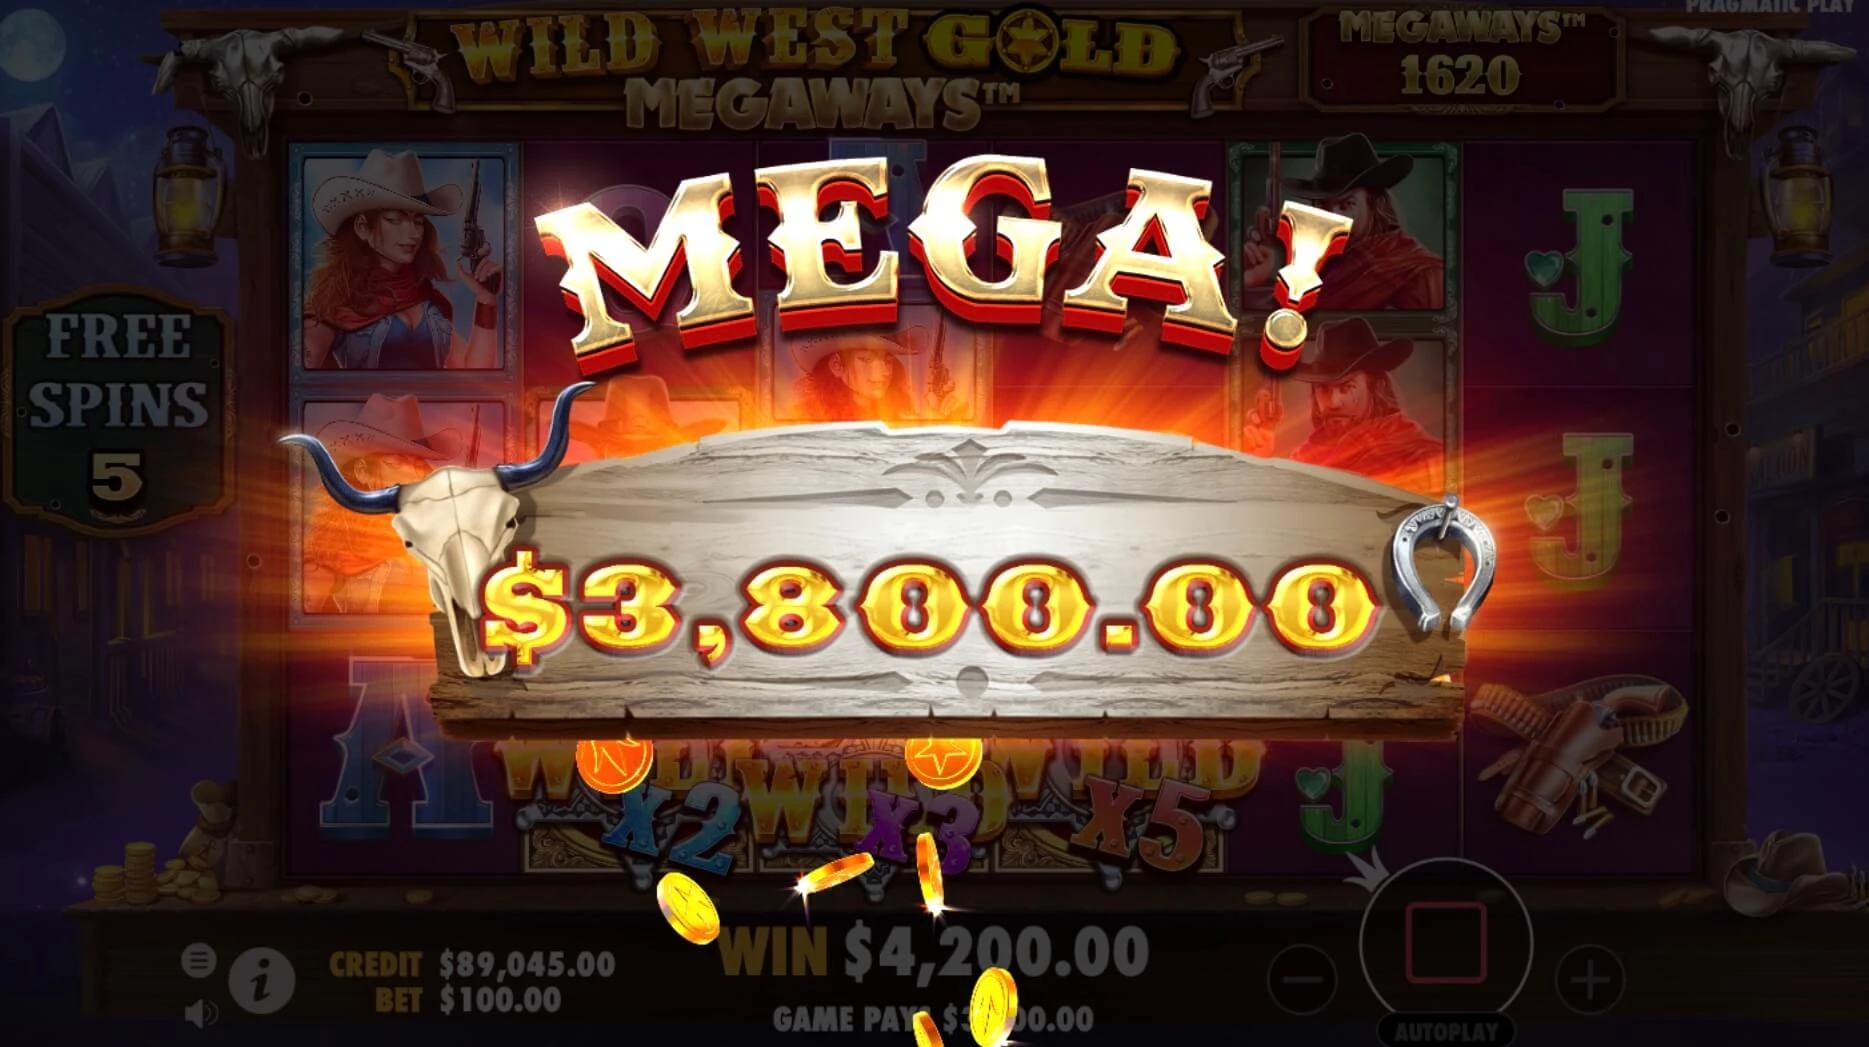 Wild West Gold Megaways megawin 83000